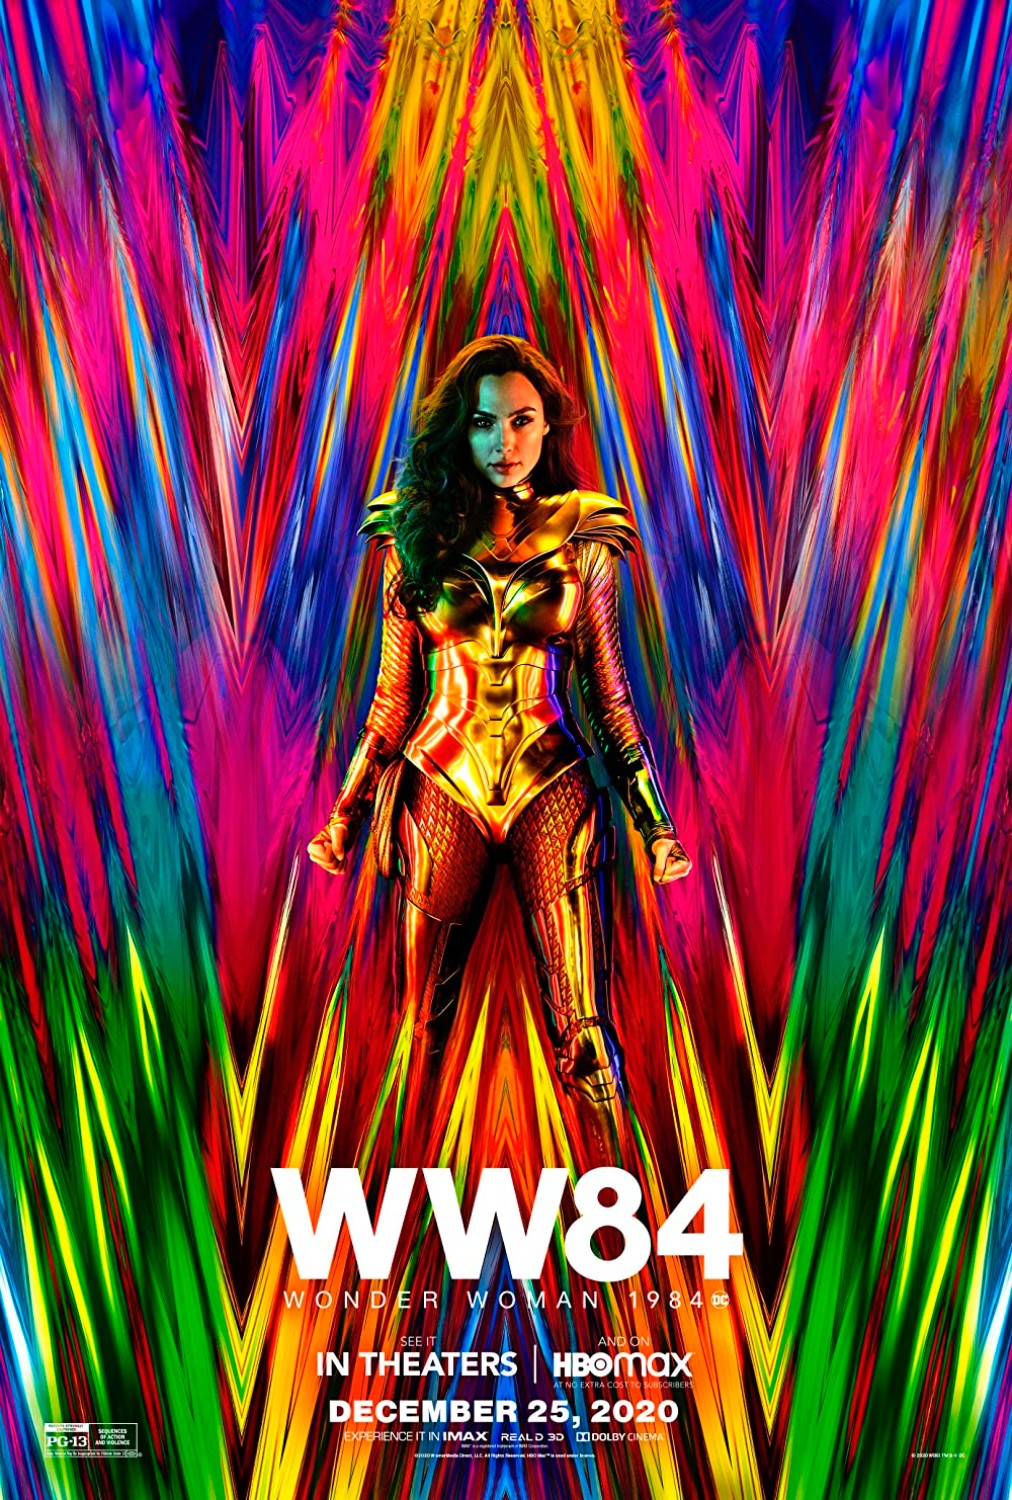 Wonder Woman 1984 ภาค 2 วันเดอร์ วูแมน 1984 พากย์ไทย (2020)